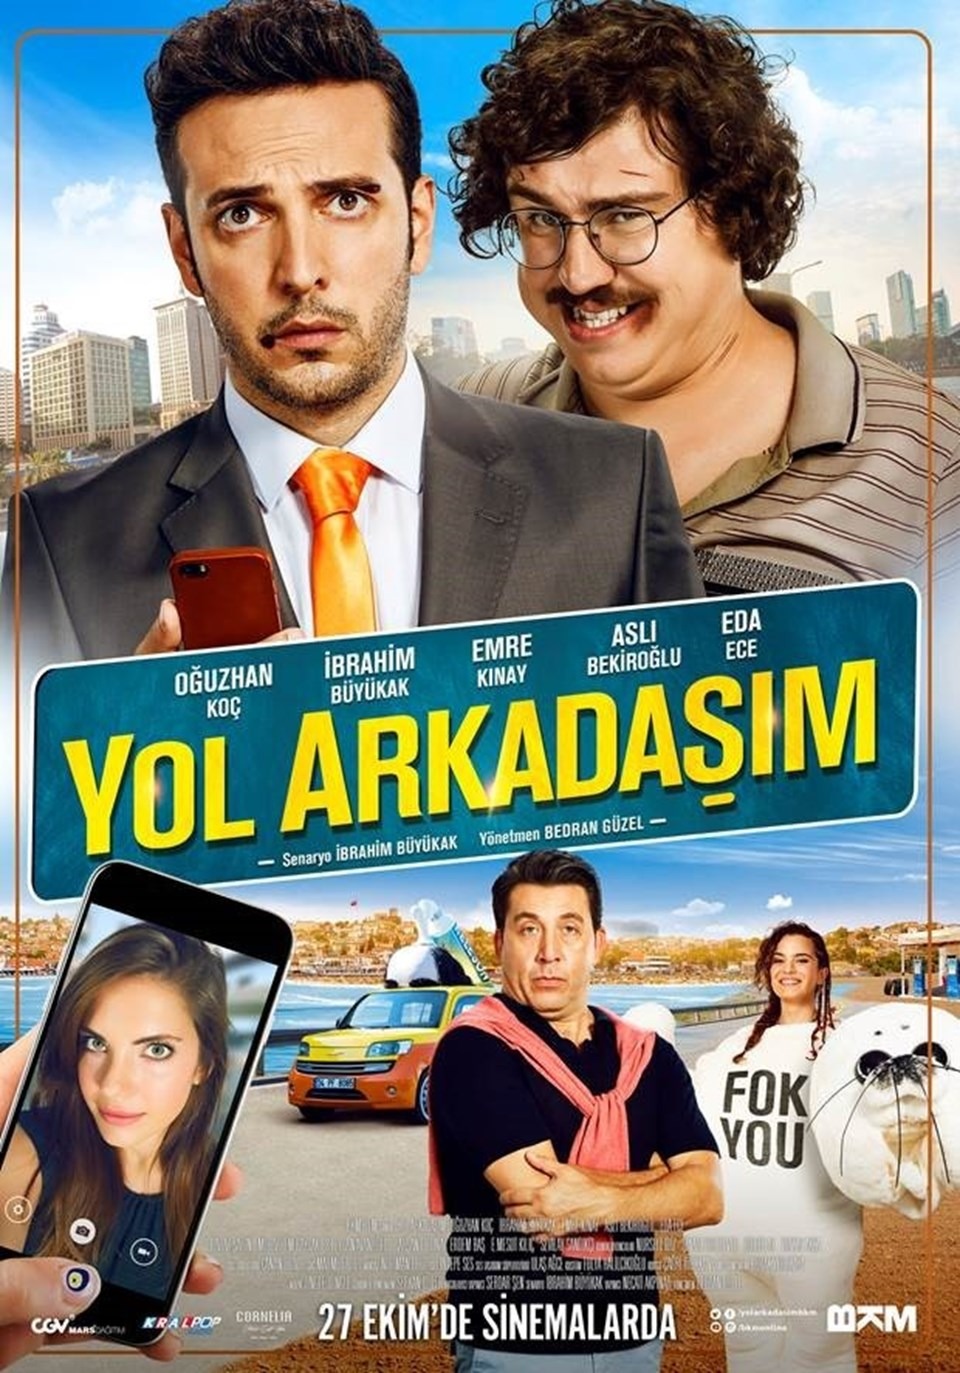 Extra Large Movie Poster Image for Yol Arkadasim 